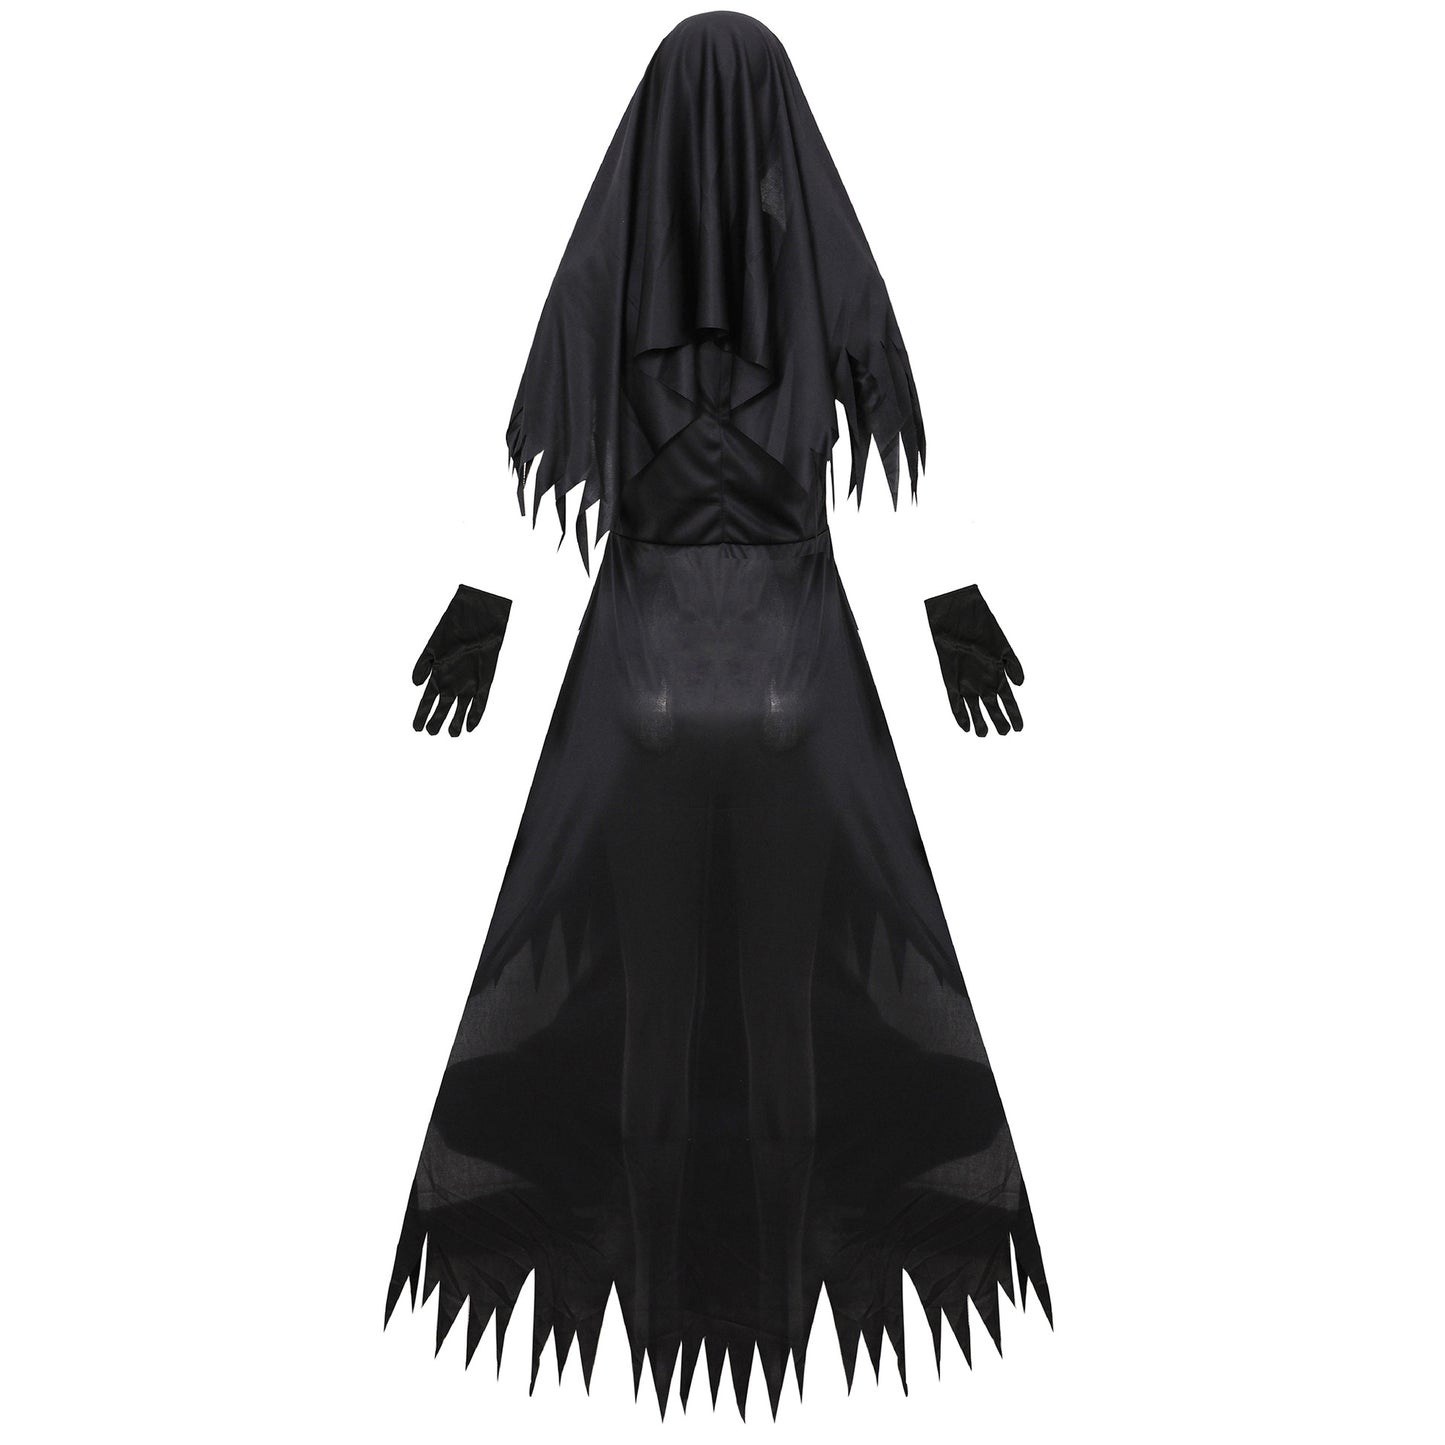 YESFASHION Women Halloween Nun Costume Cosplay